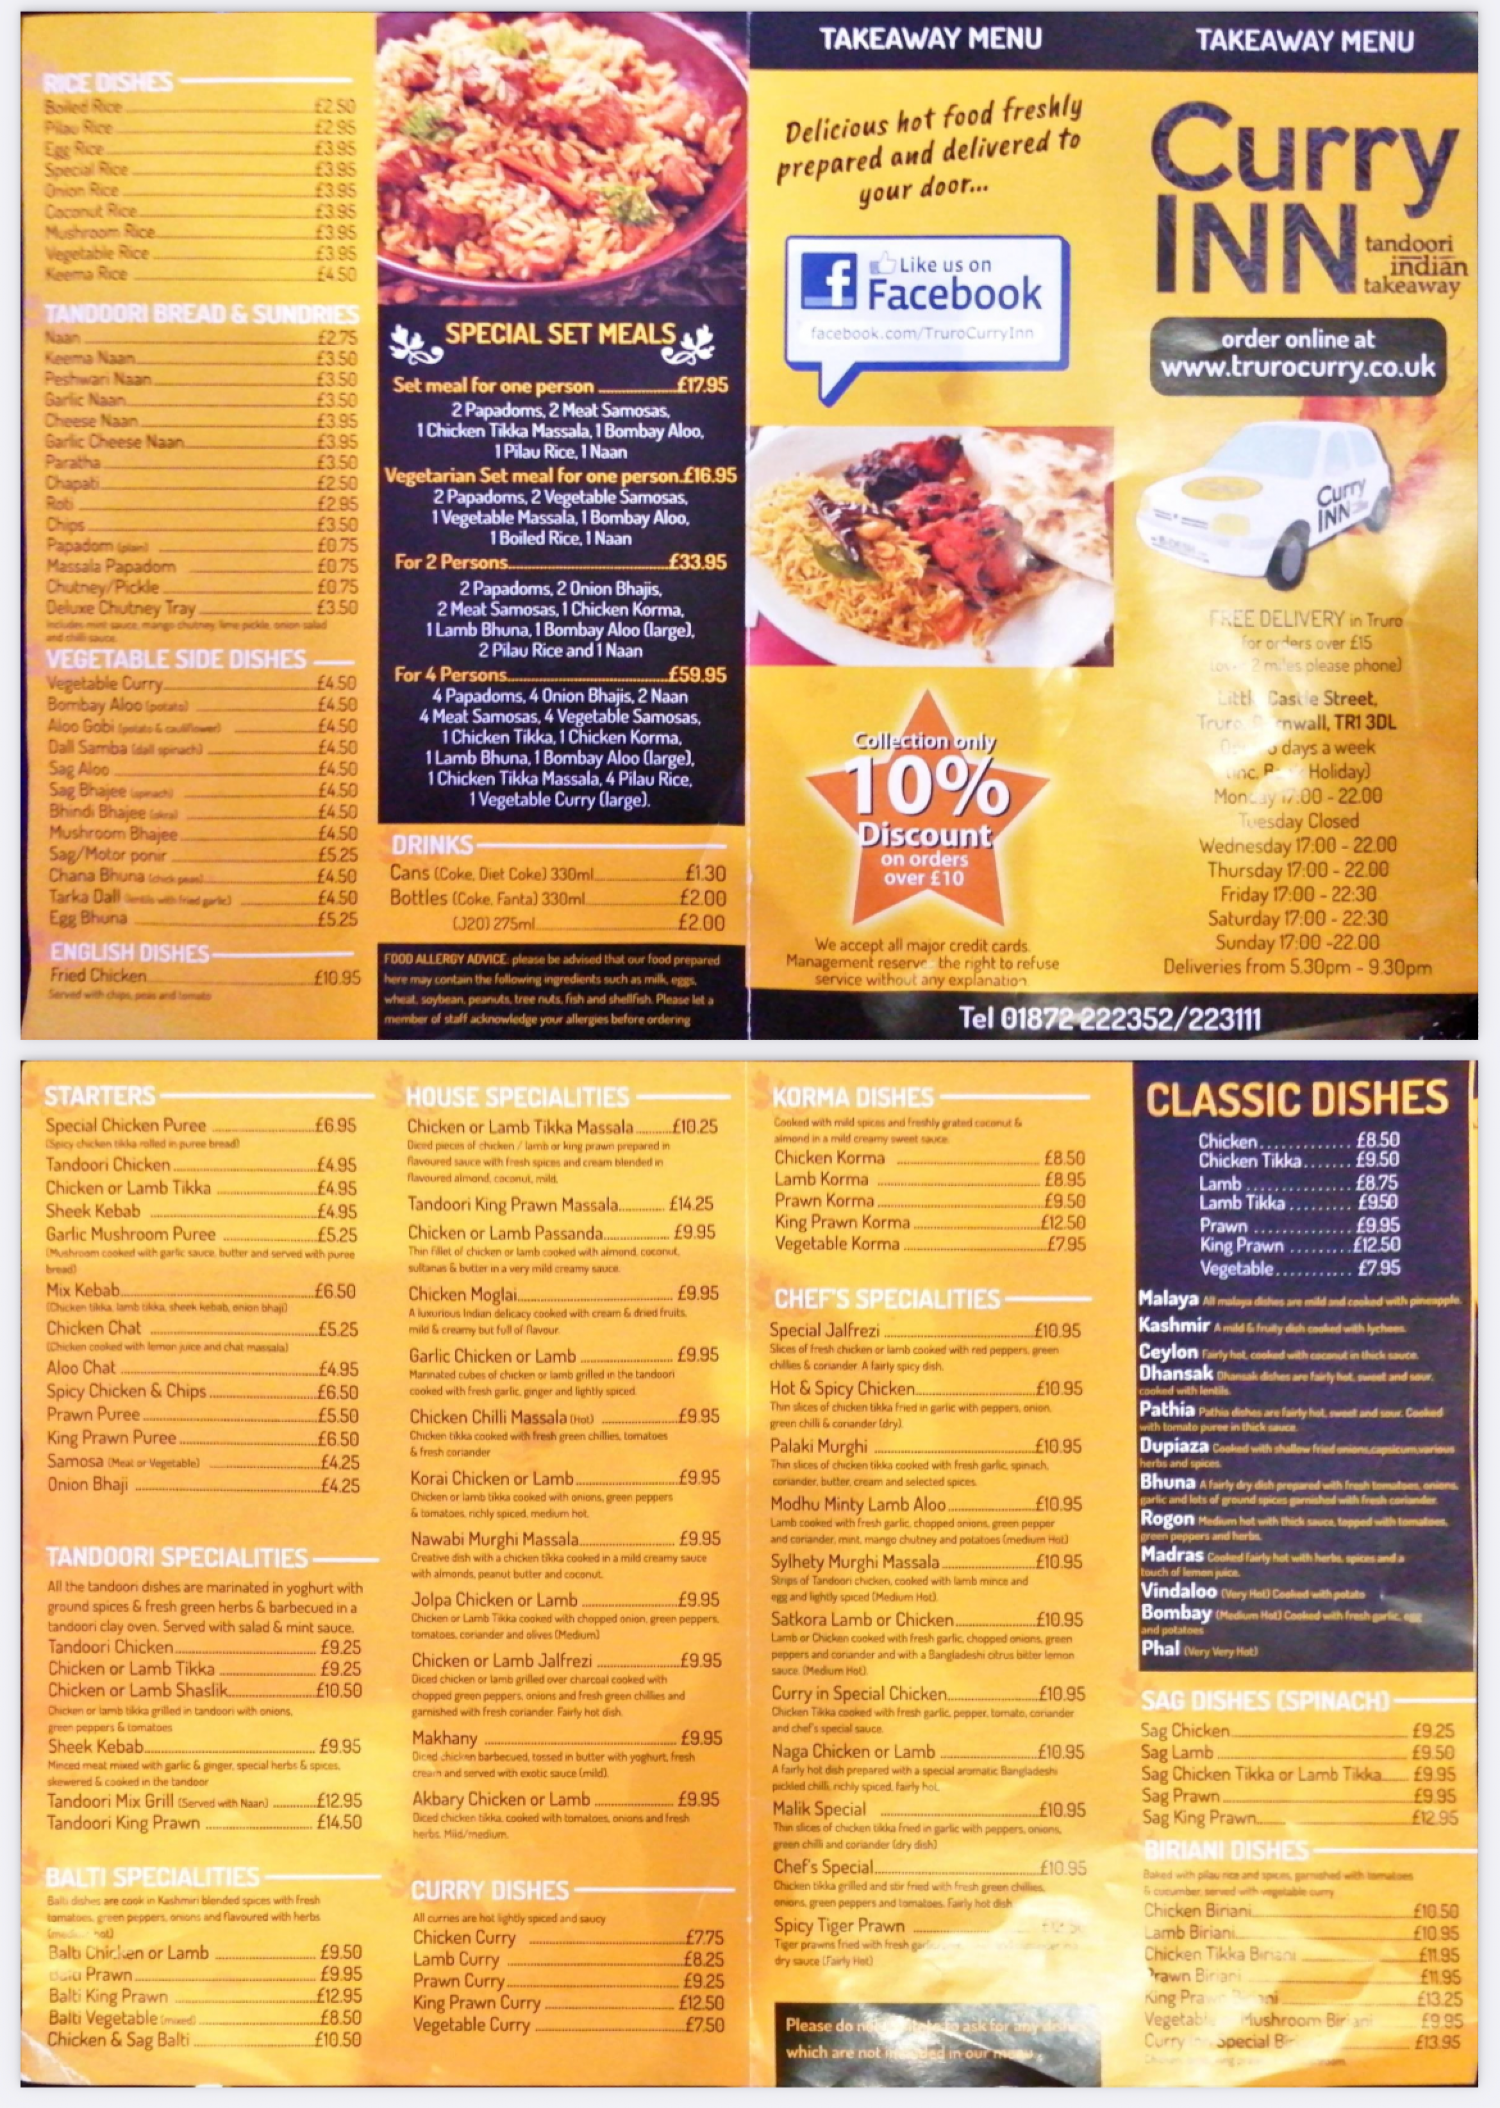 Takeaway Restaurant Menu Page - Curry Inn - Truro